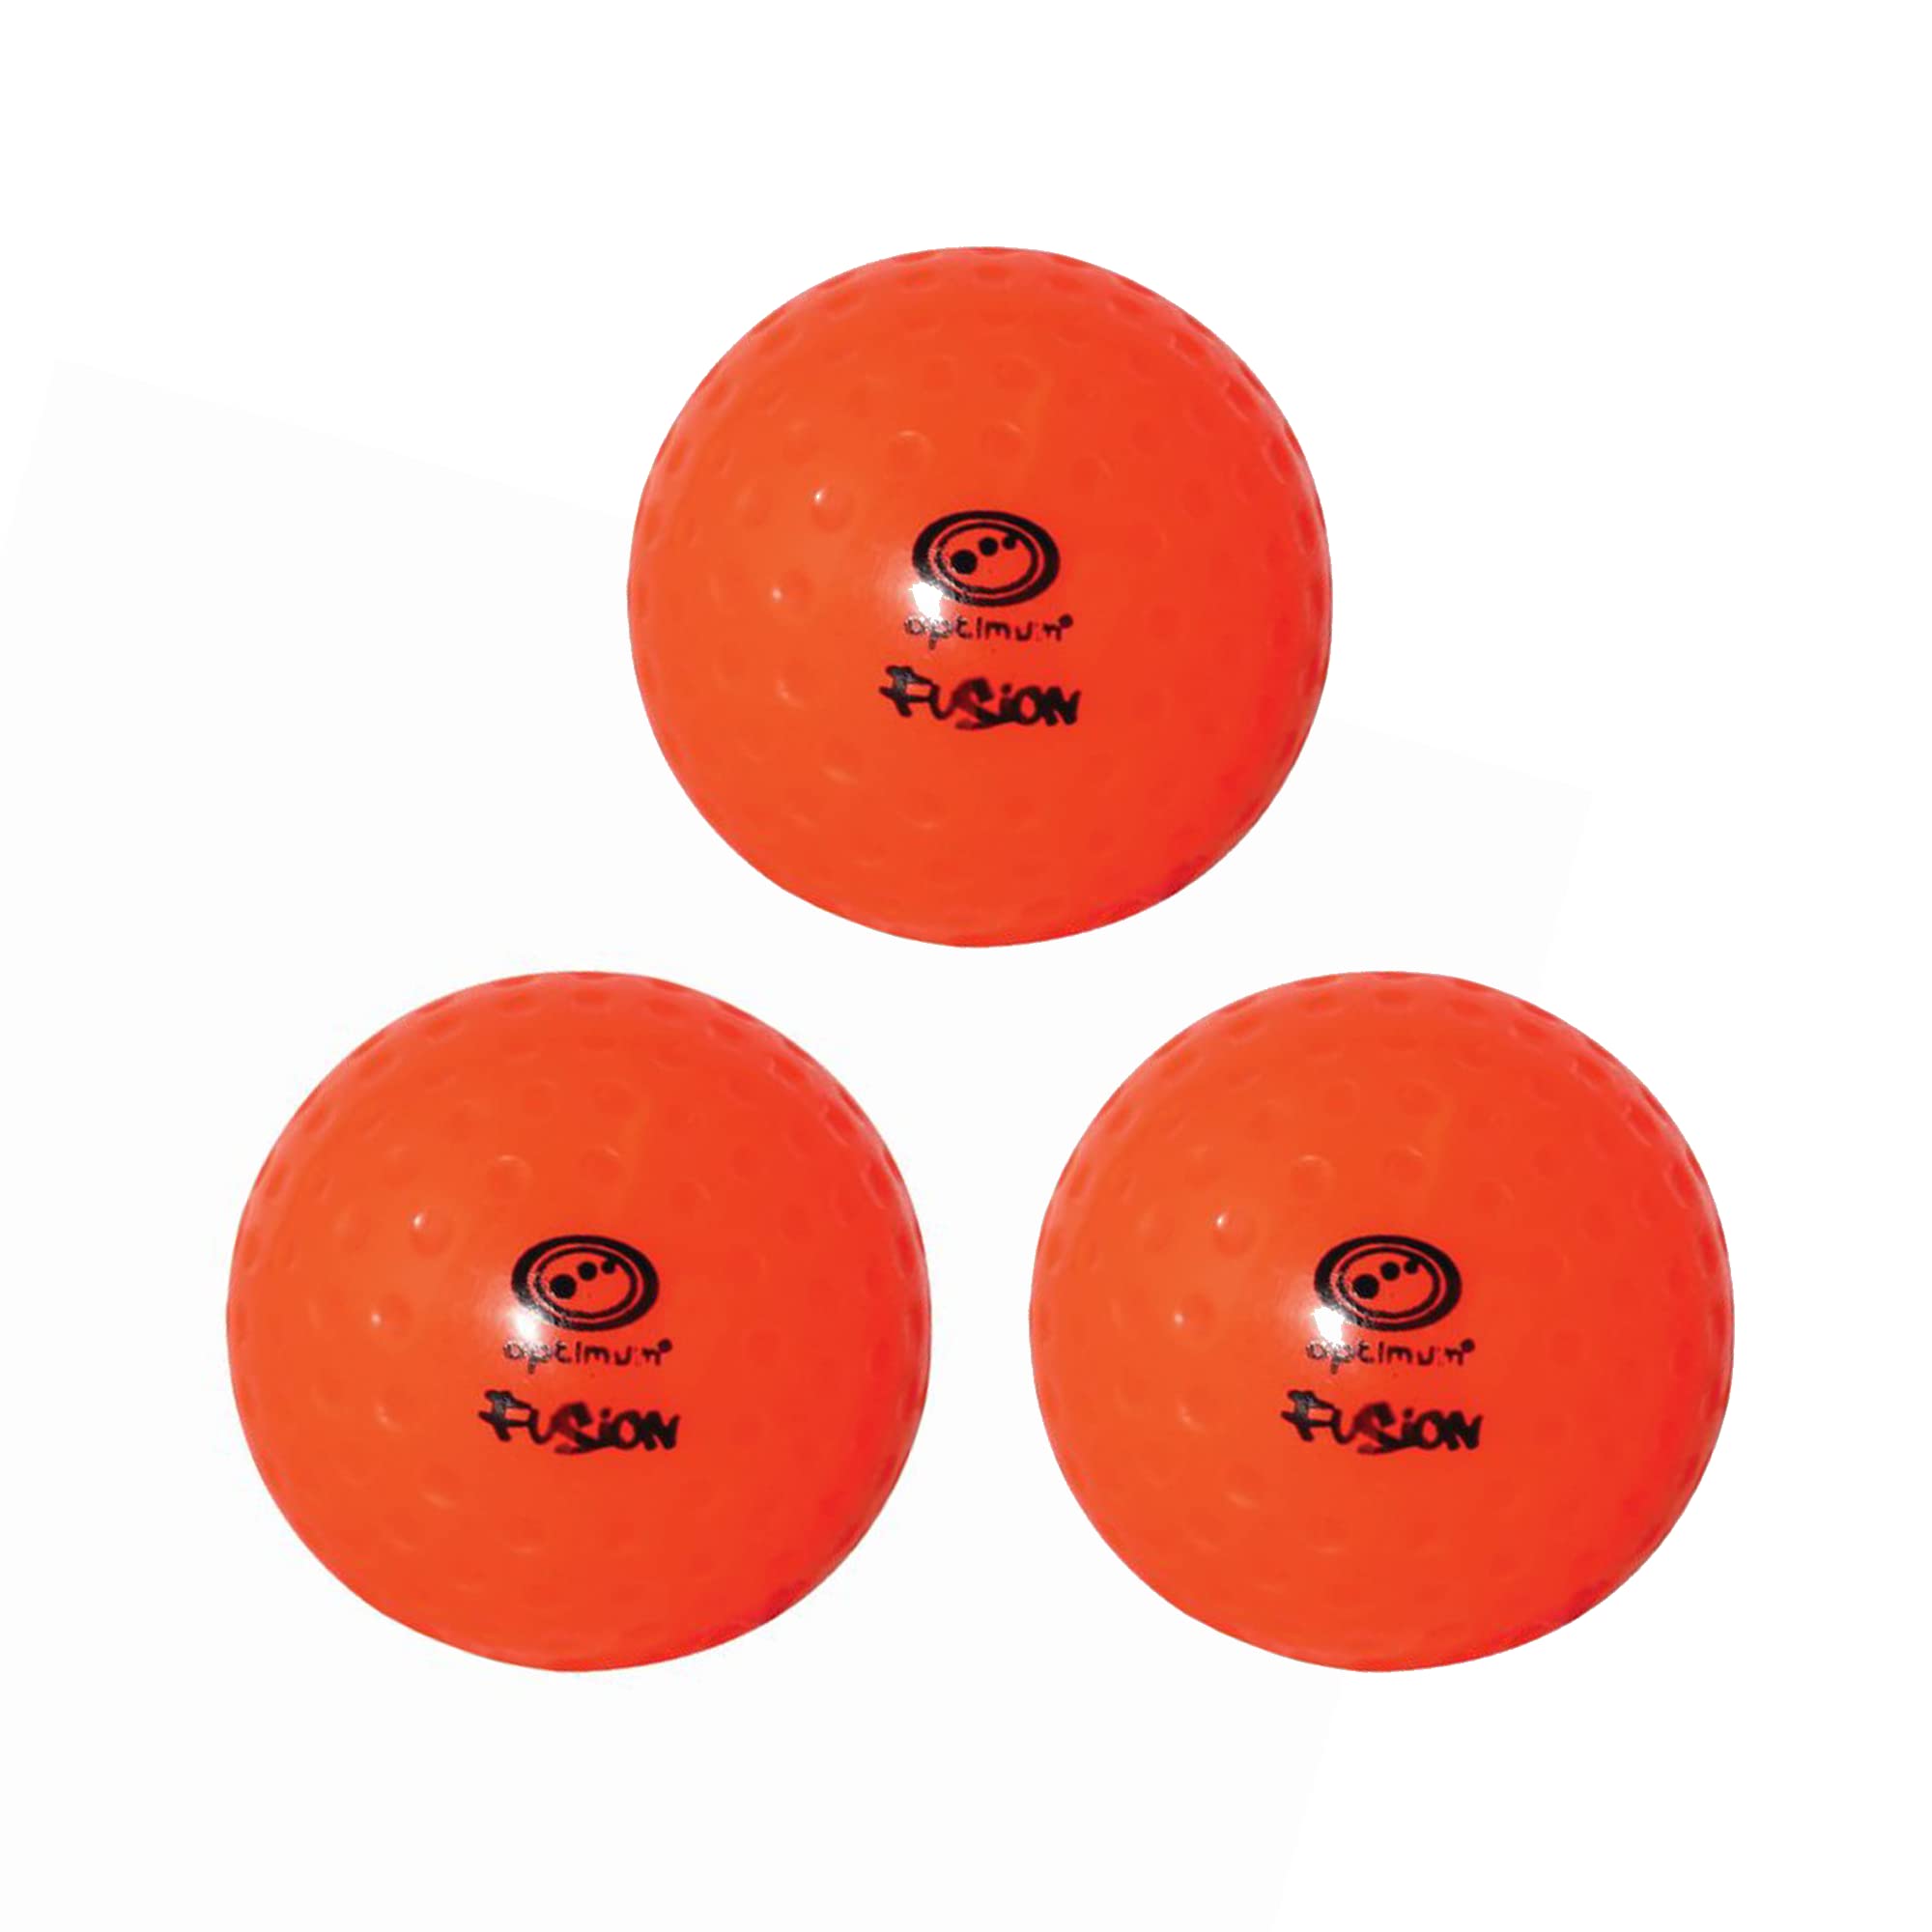 Fusion Hockey Ball - Orange - Optimum